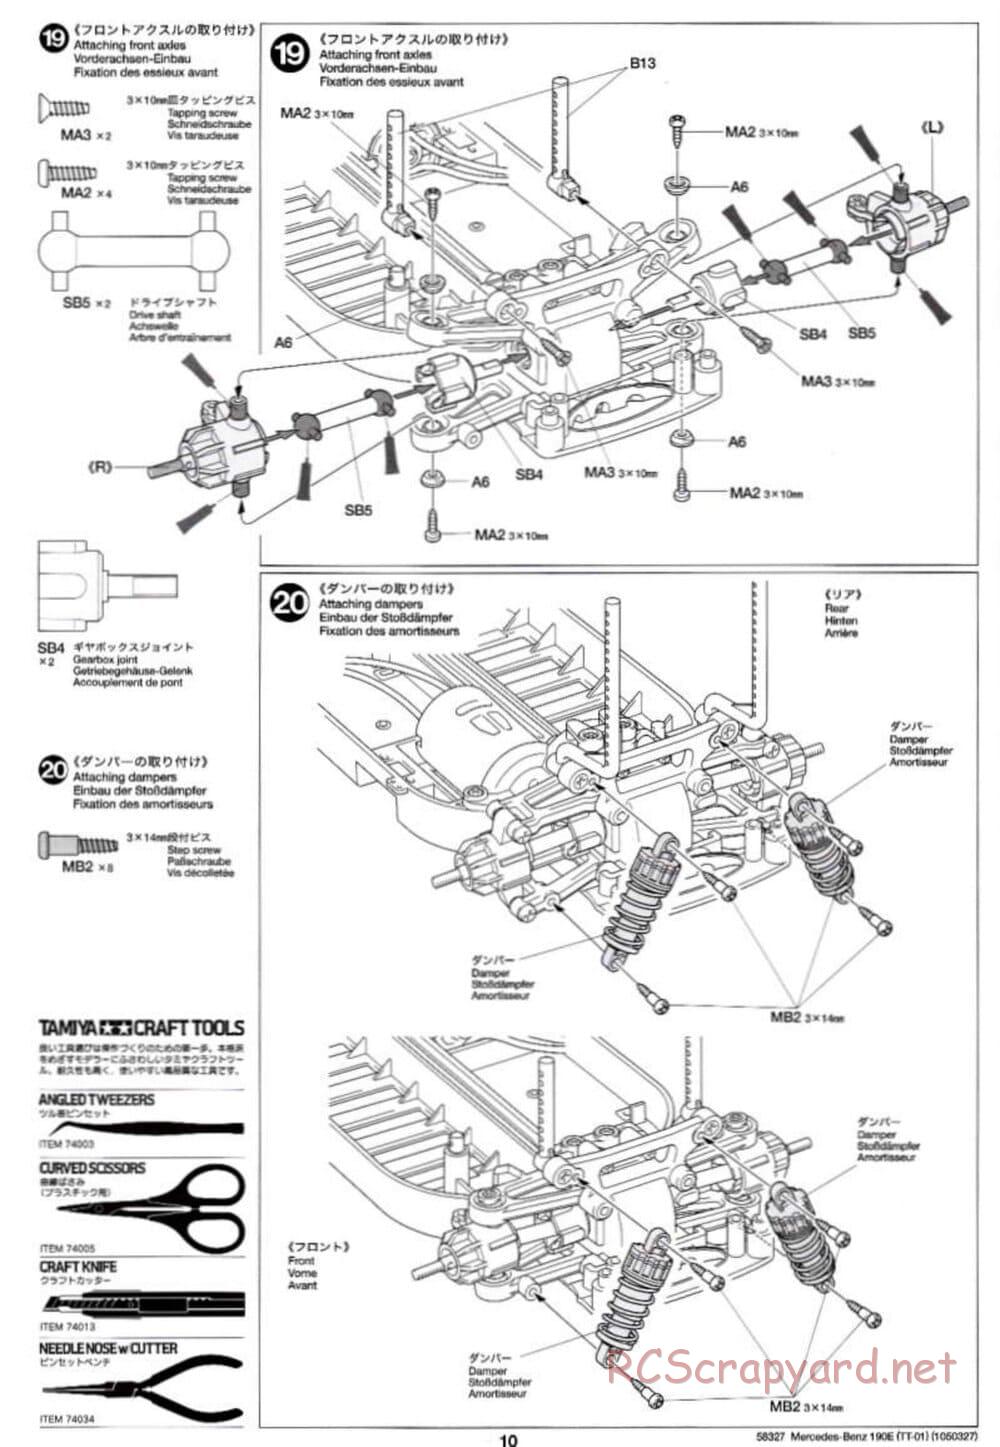 Tamiya - Mercedes Benz 190E Evo.II AMG - TT-01 Chassis - Manual - Page 10